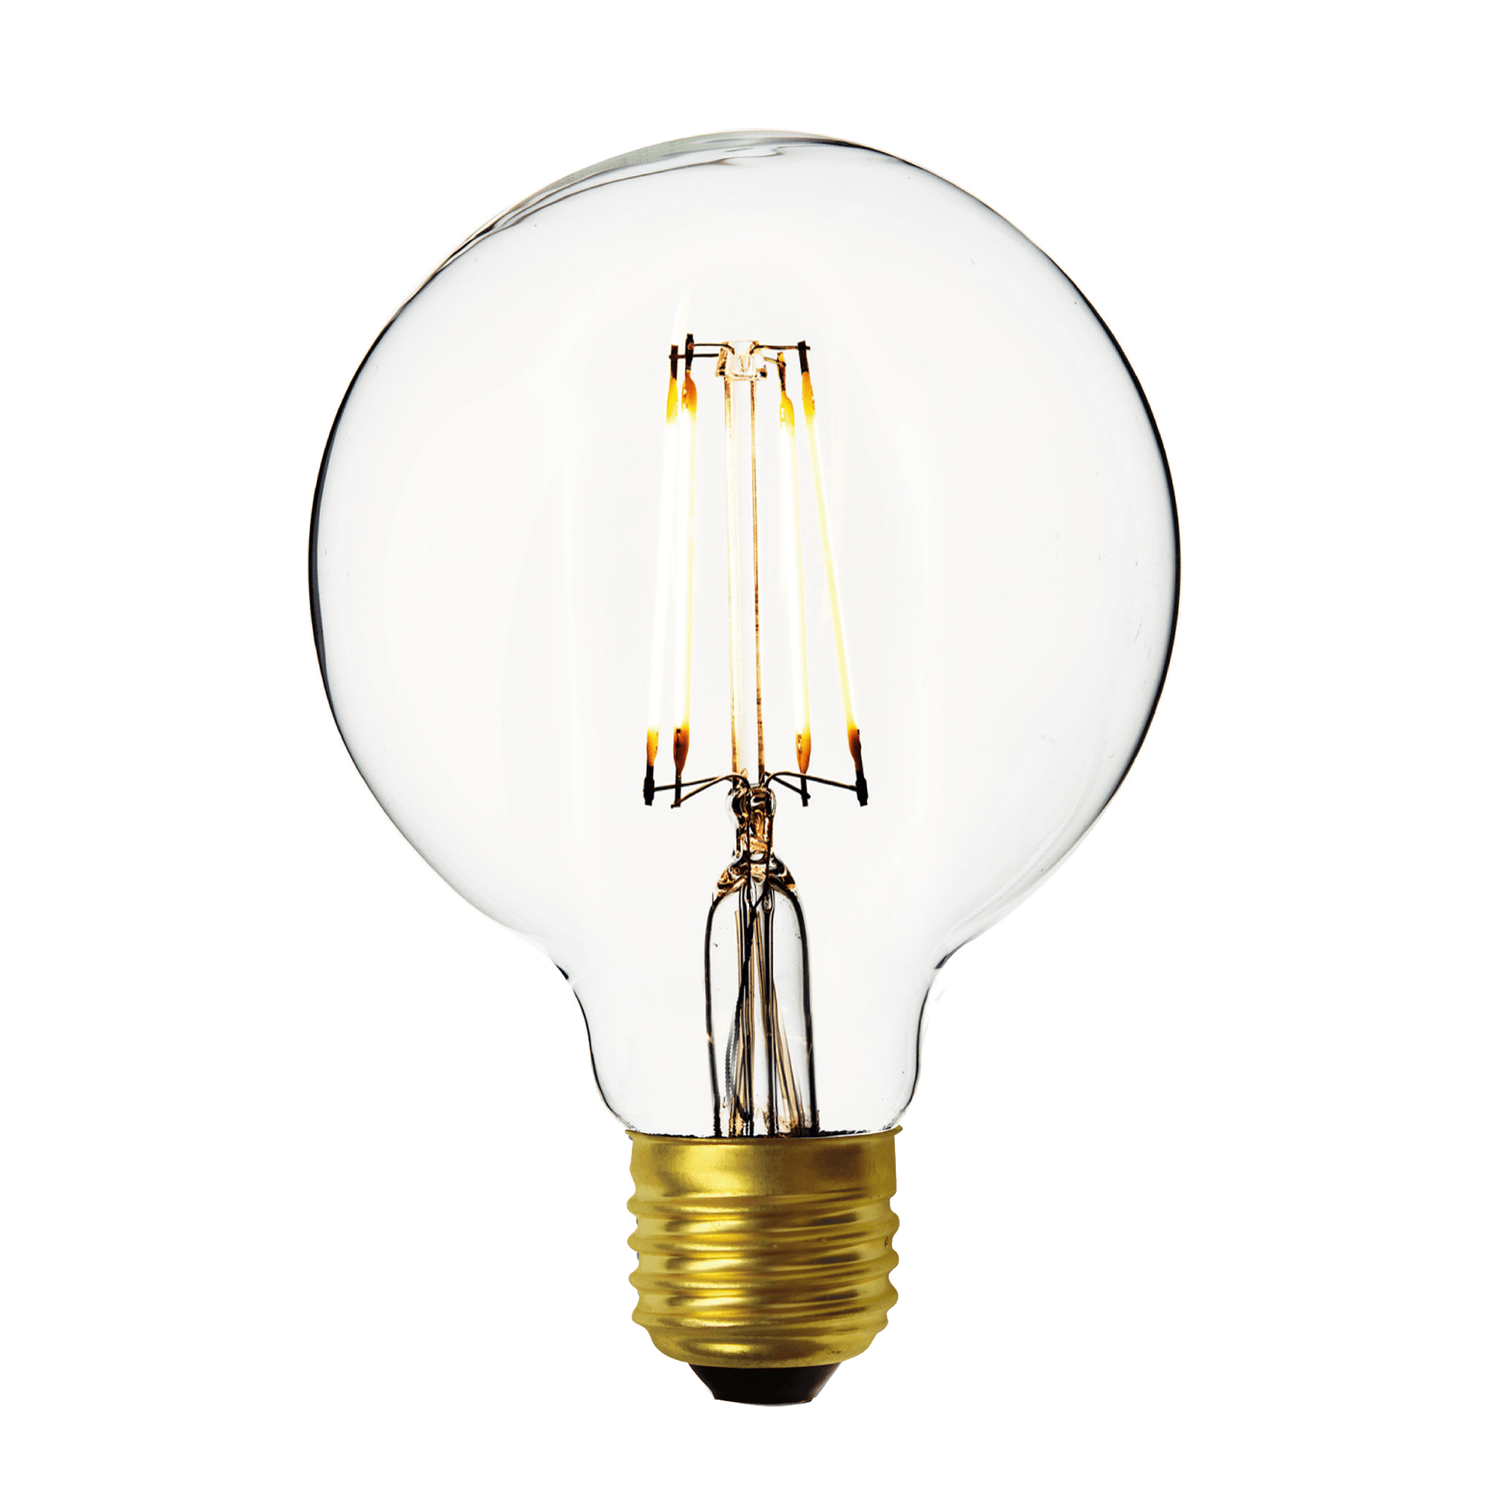  Industville-Industville Vintage LED Edison Bulb Old Filament Lamp - 7W E27 Small Globe G95 - Clear-Clear 29 